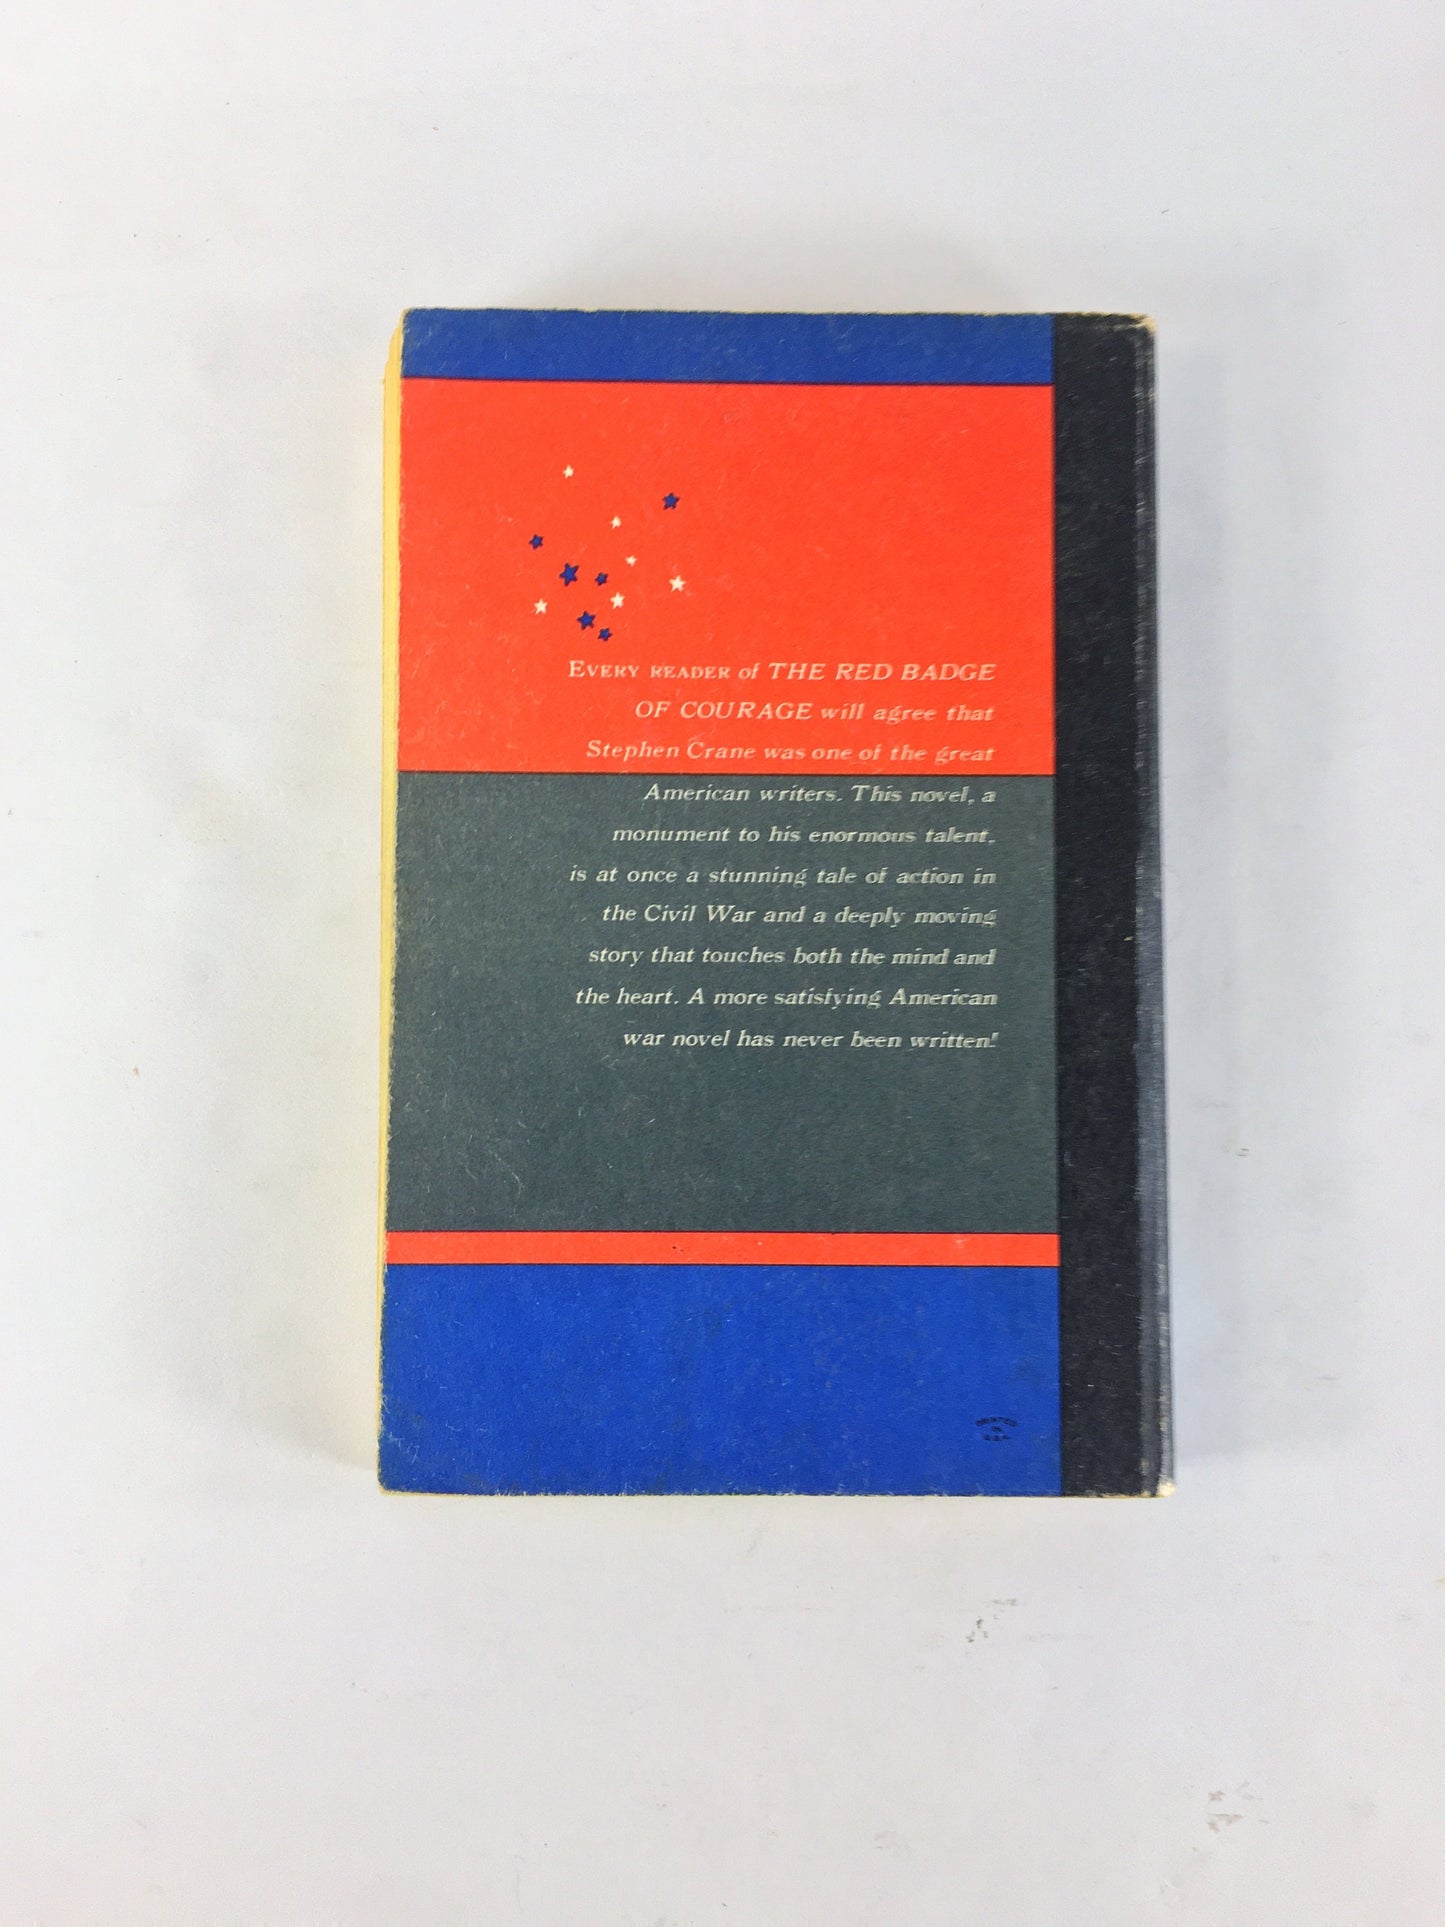 1961 Red Badge of Courage by Stephen Crane. Vintage Washington Square paperback book. Blue red black home bookshelf decor. Civil War Union